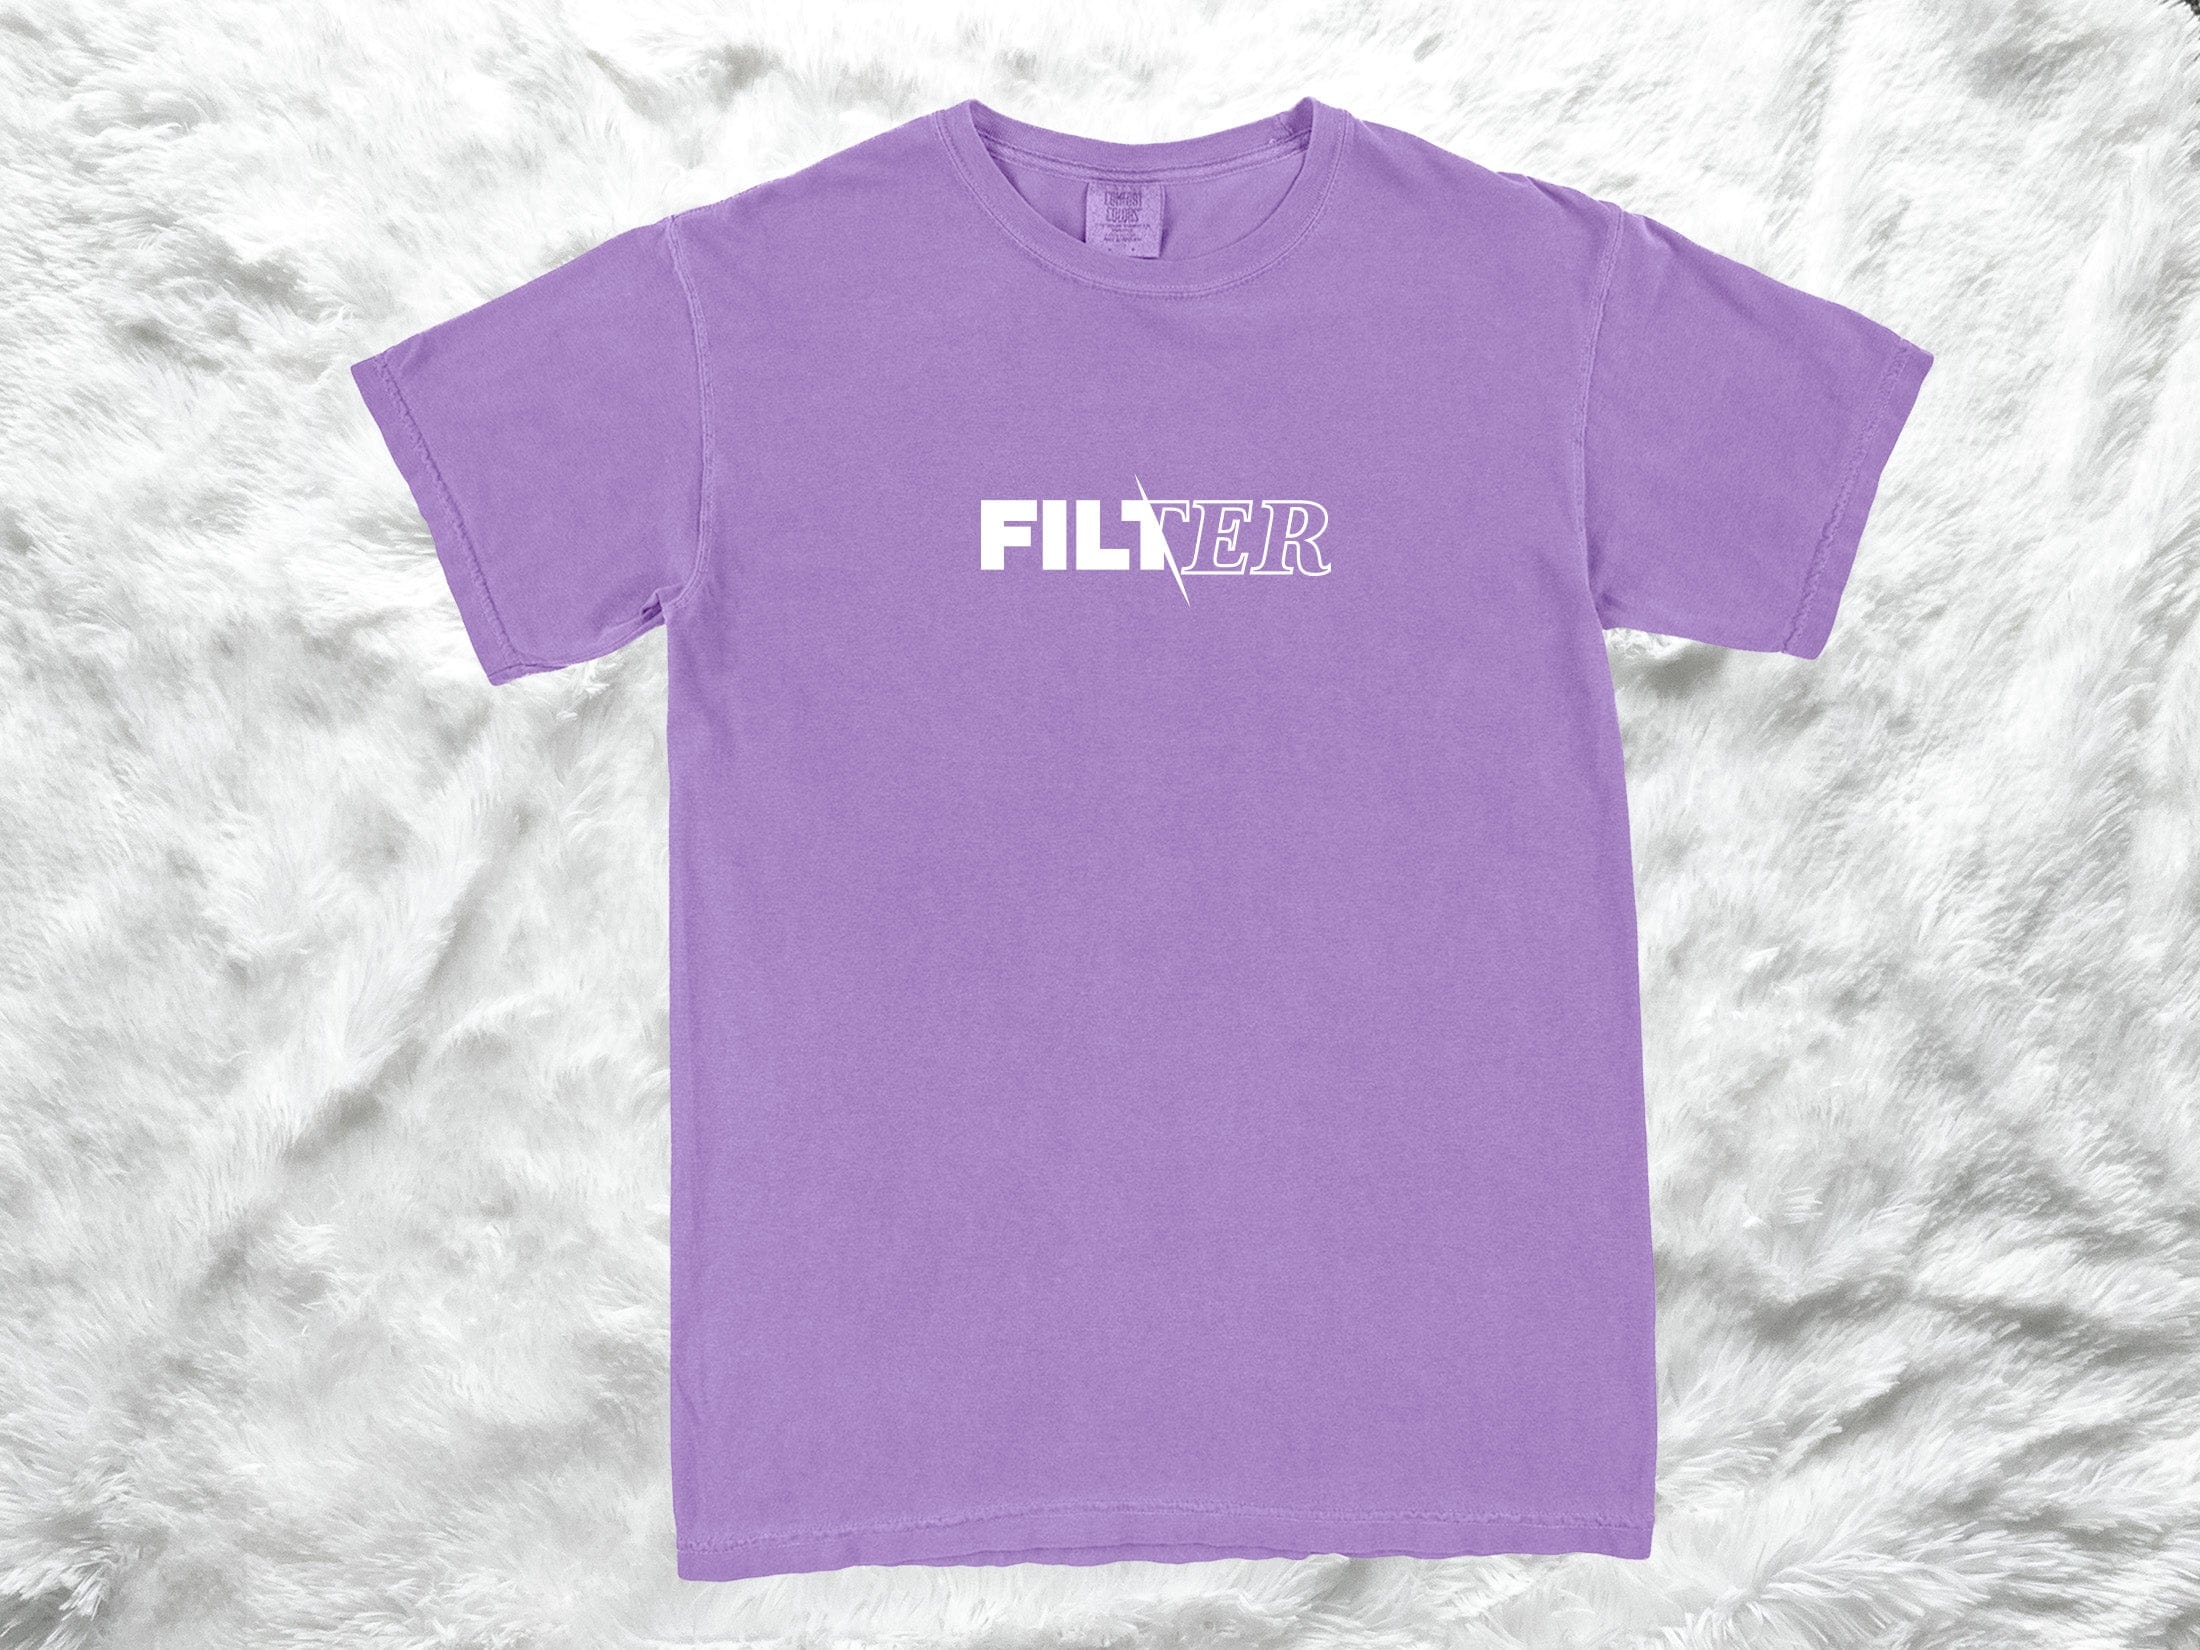 Filter T-Shirts